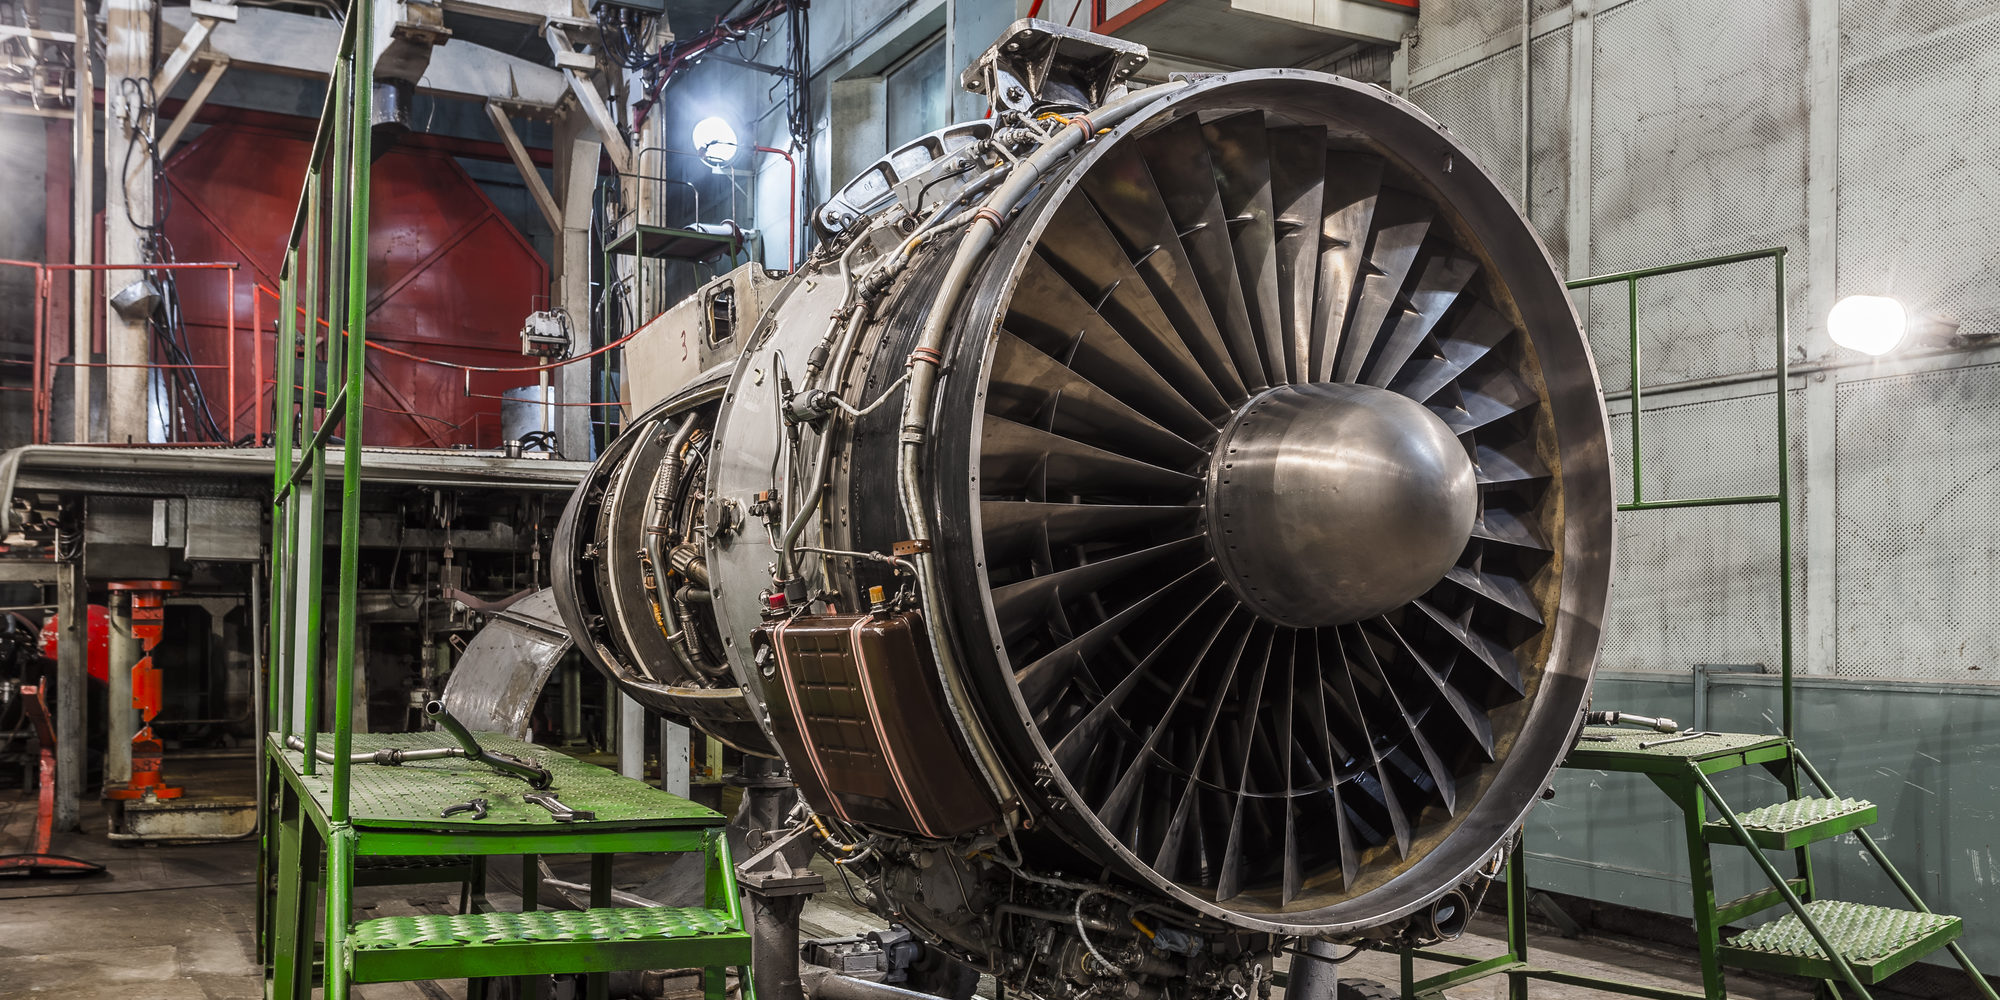 Airplane gas turbine engine detail in aviation hangar. Plane rotor under heavy maintenance.